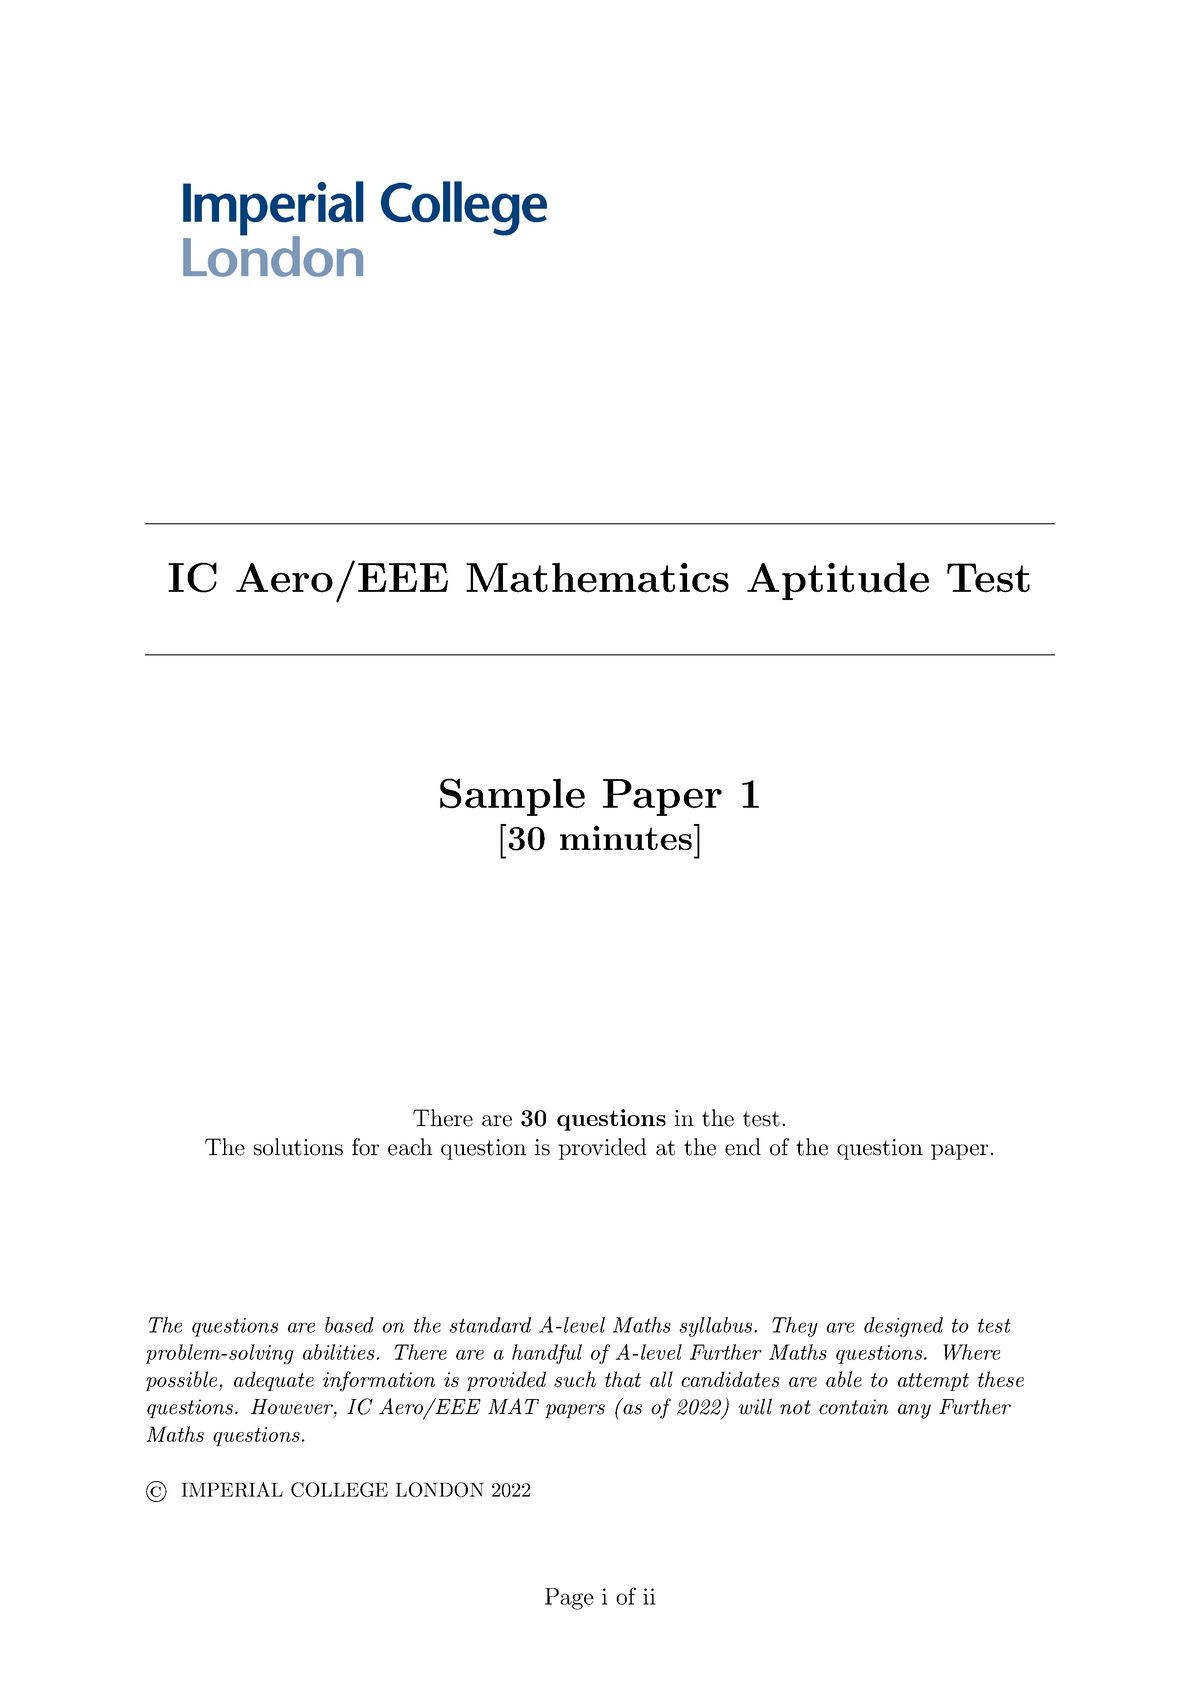 sample-1-practice-aero-mat-ic-aero-eee-mathematics-aptitude-test-sample-paper-1-30-minutes